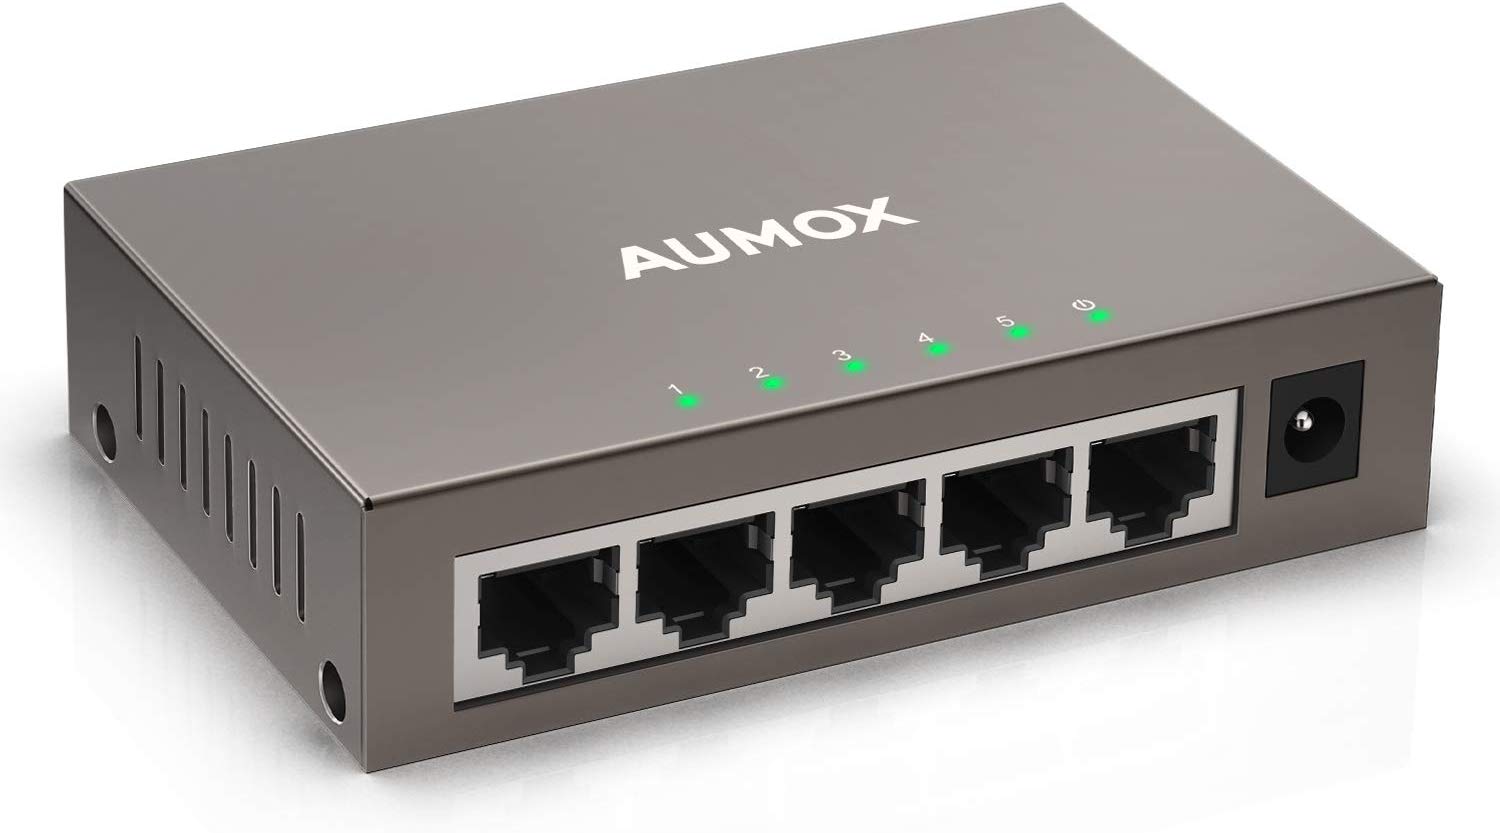  Aumox 5 Port Gigabit Ethernet Network Switch